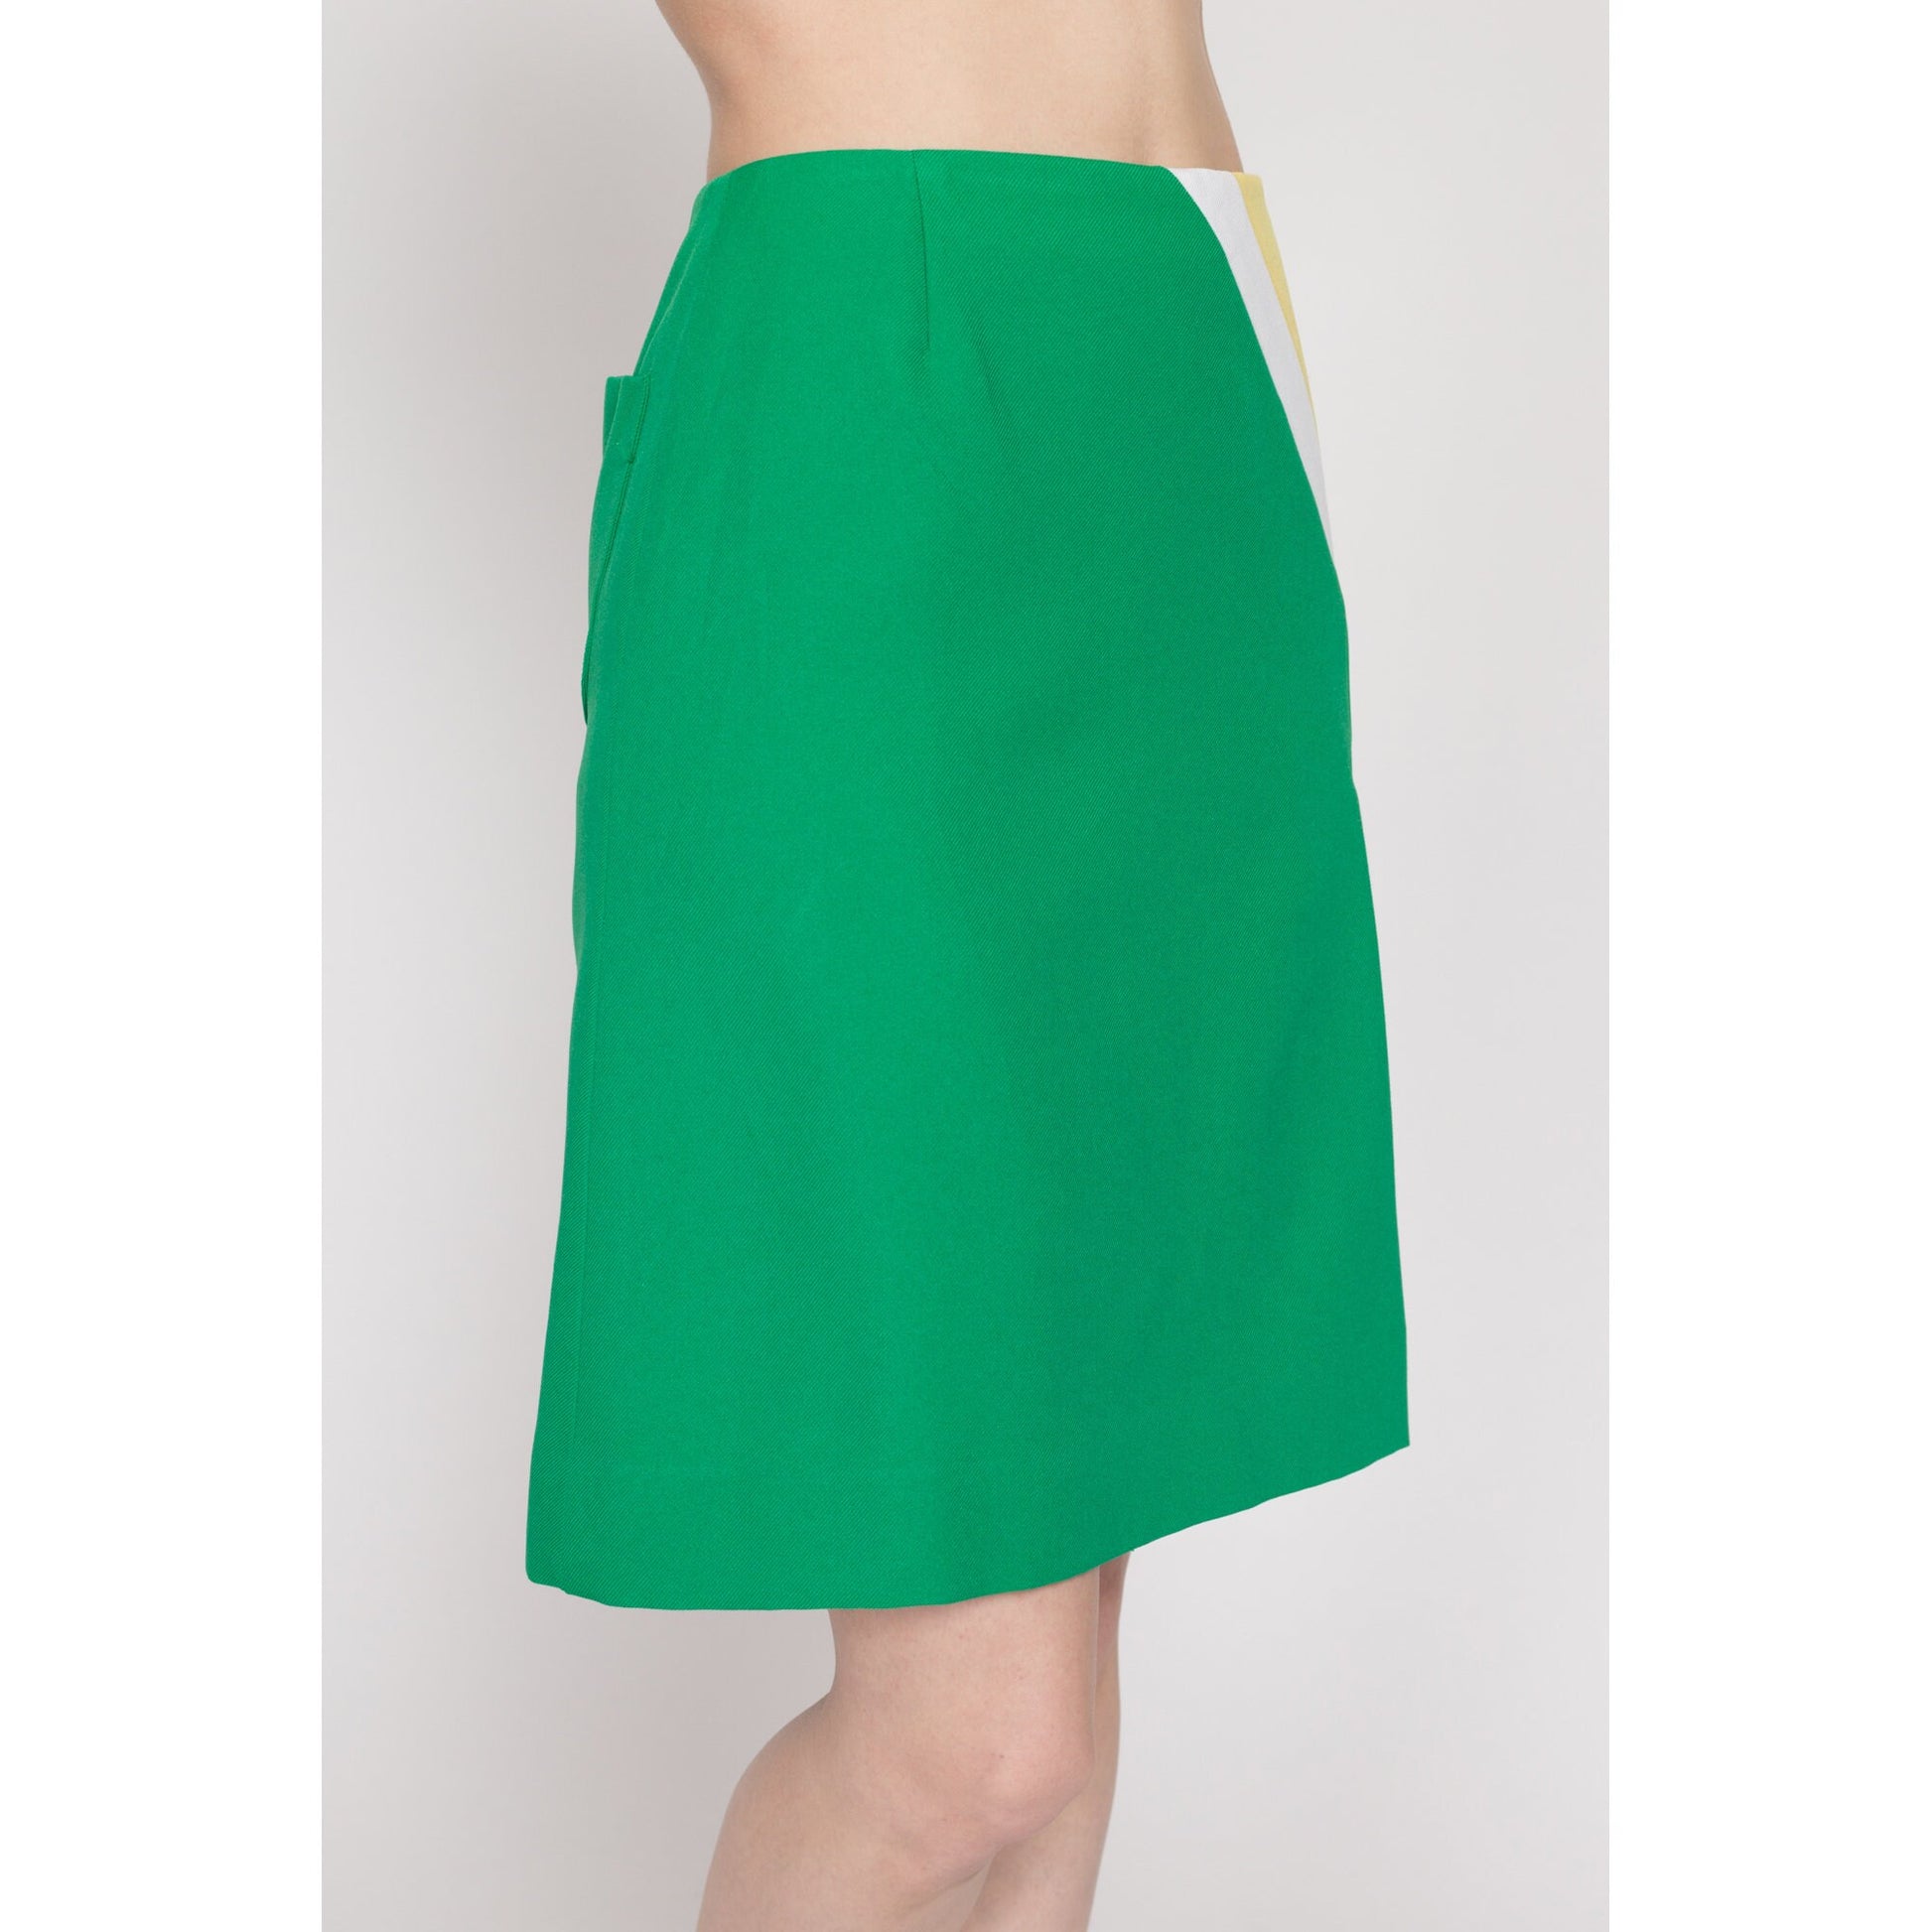 Small 70s Green Color Block Tennis Skirt 25.5" | Retro Sportswear High Waisted A Line Athletic Mini Skort